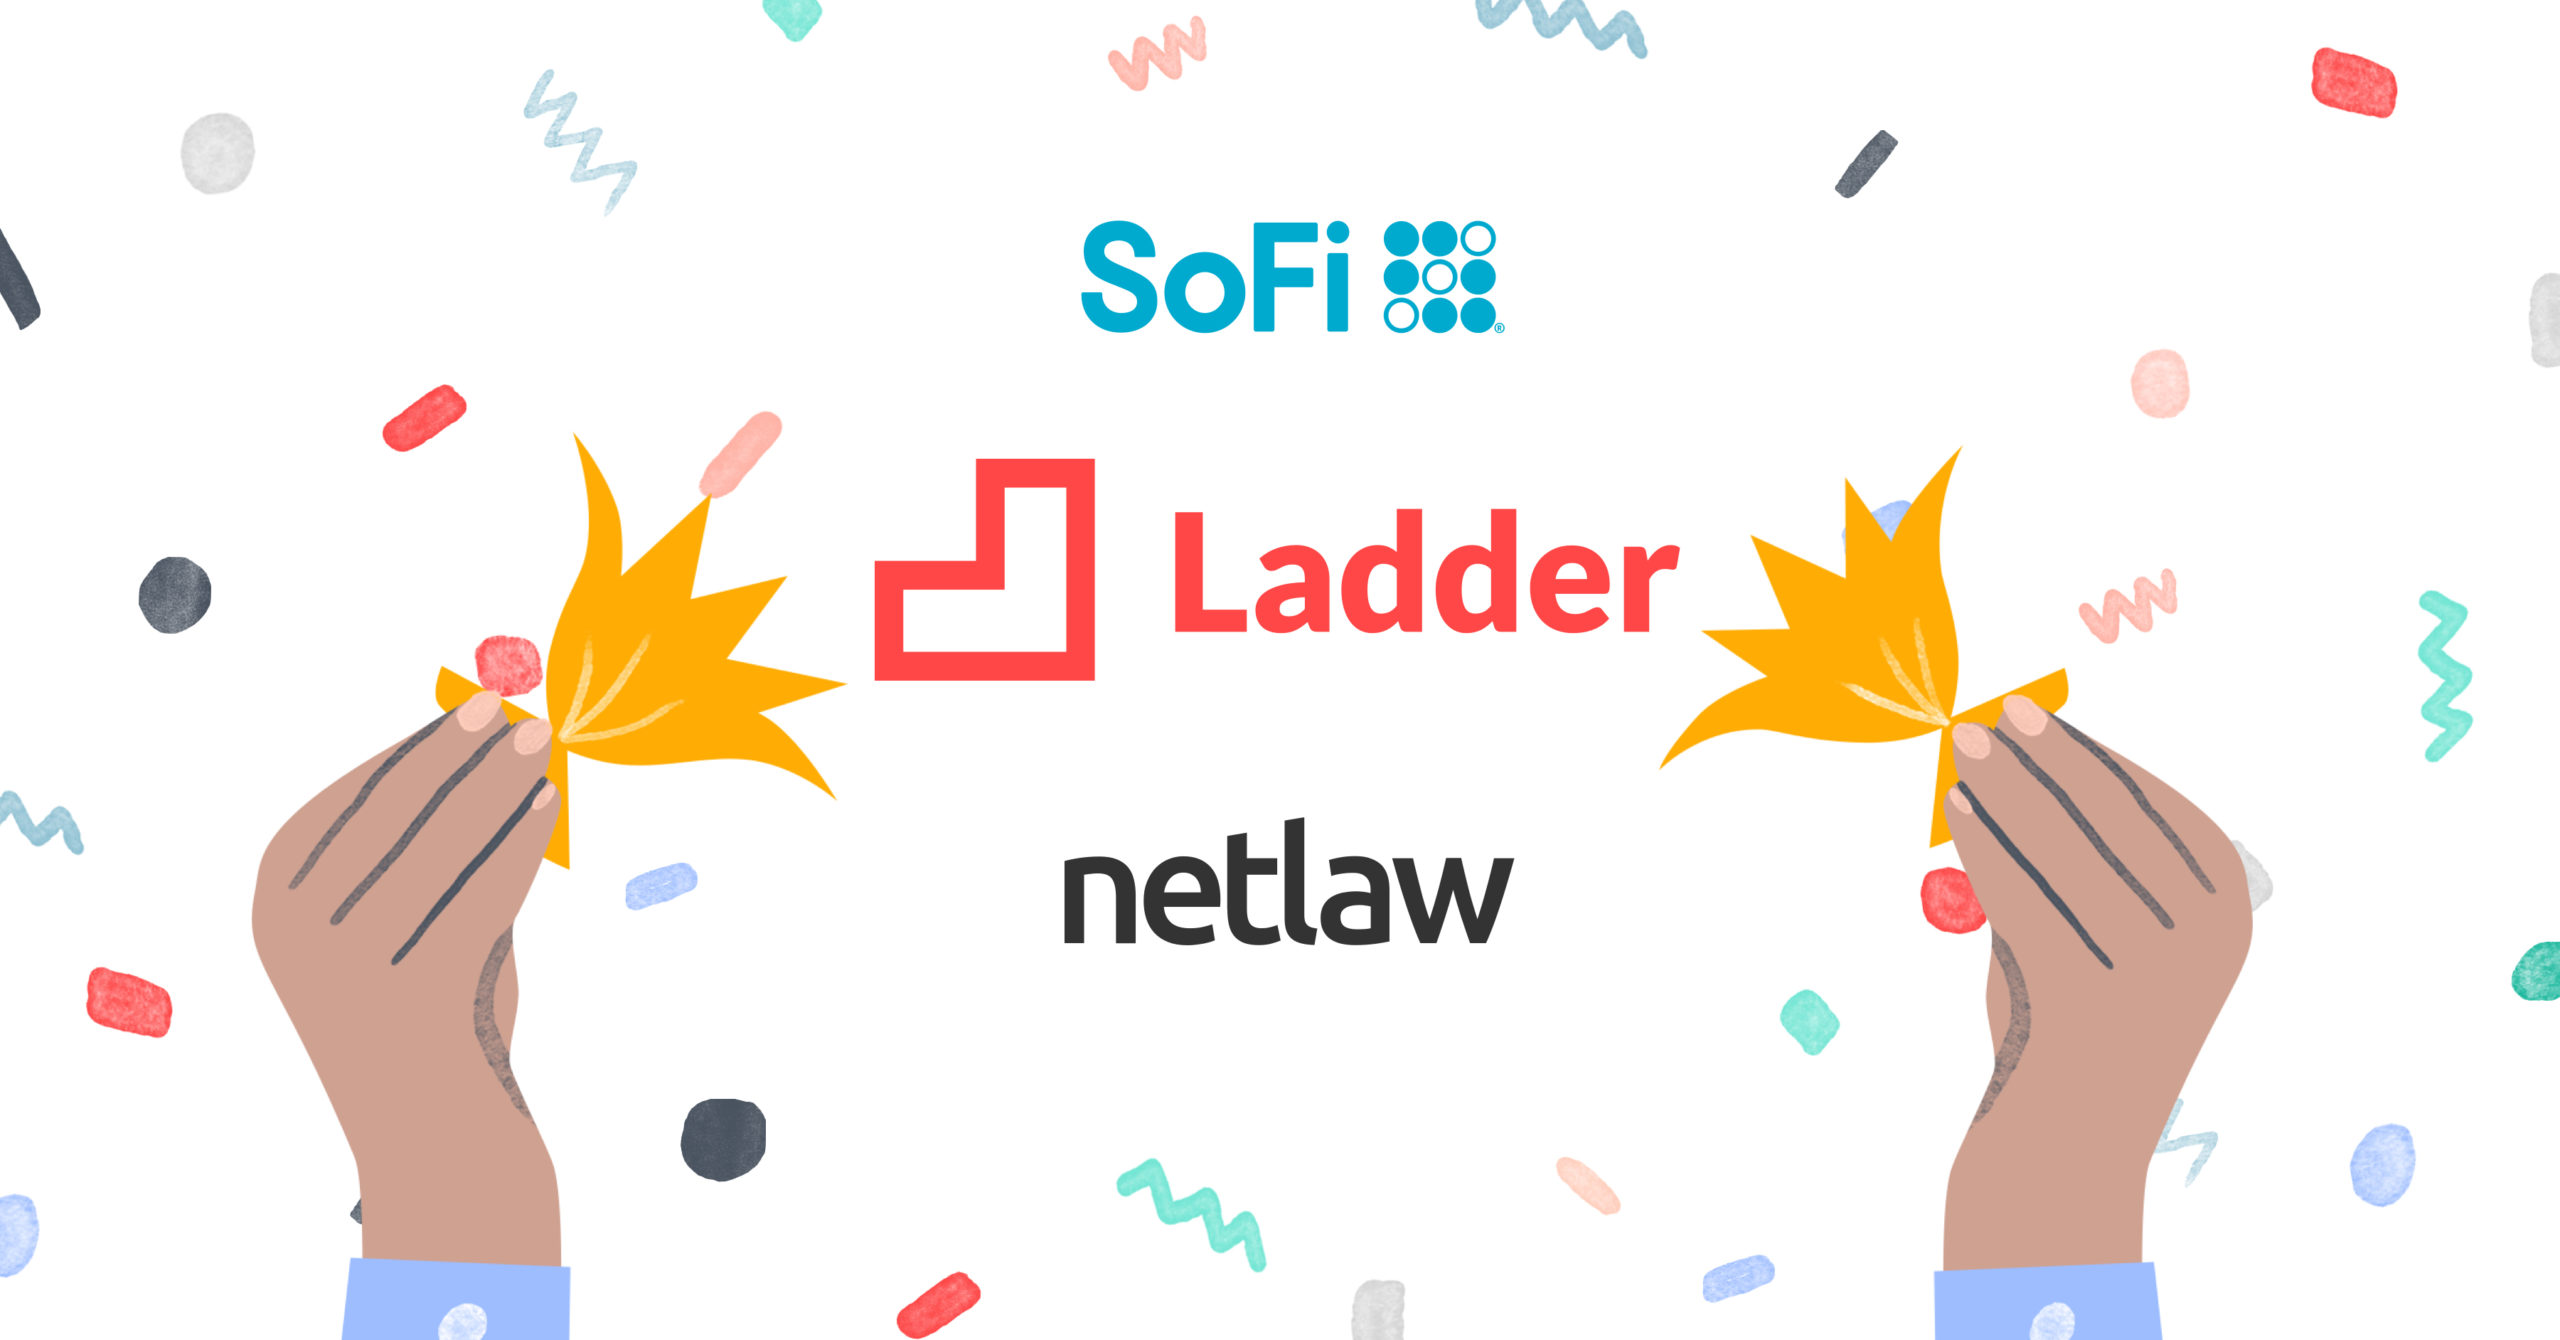 SoFi, Ladder & netlaw